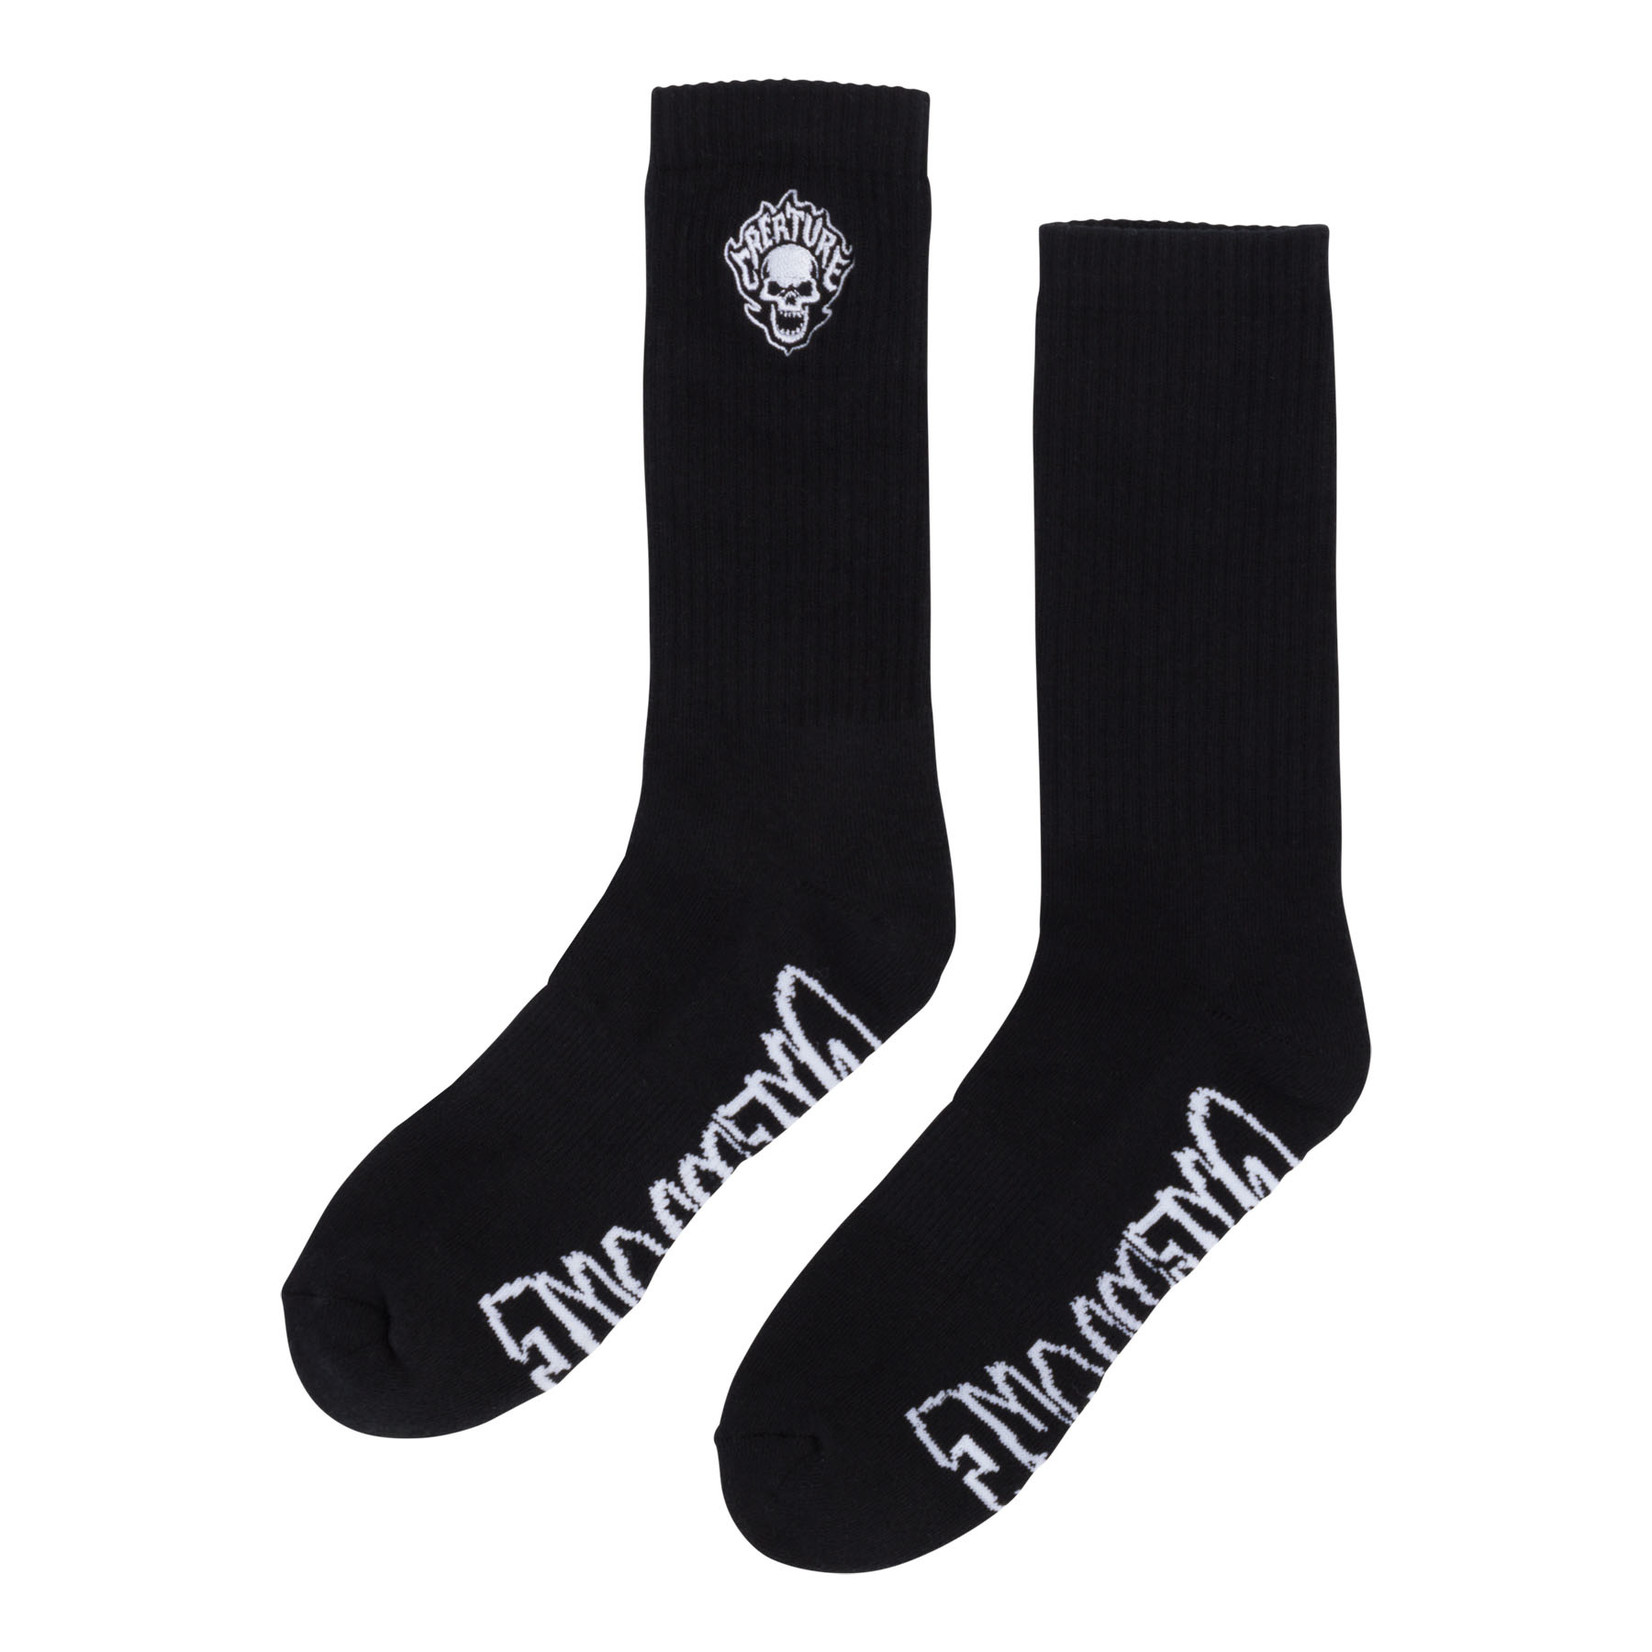 Creature Creature Bonehead Flame Crew Socks - Black 9-11